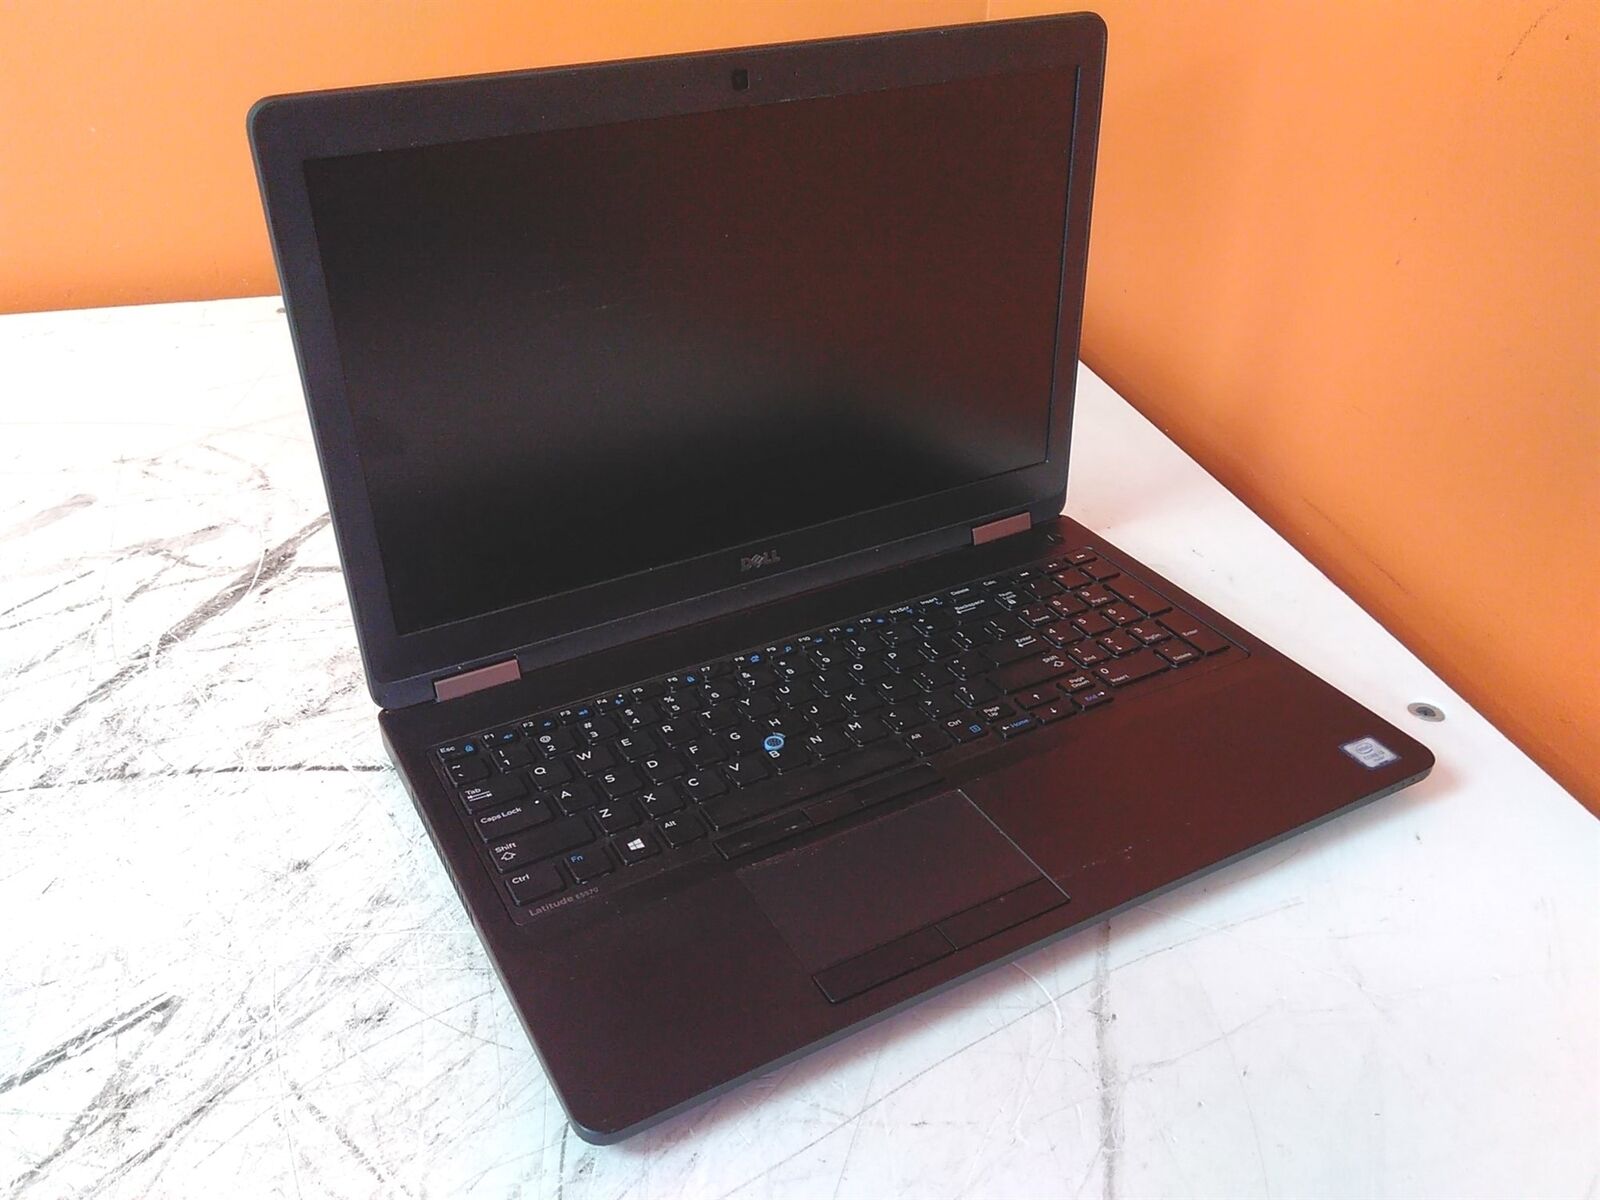 Light Sports Dell Latitude E5570 Laptop Core i3-6100U 2.3GHz 4GB 0HD AS-IS